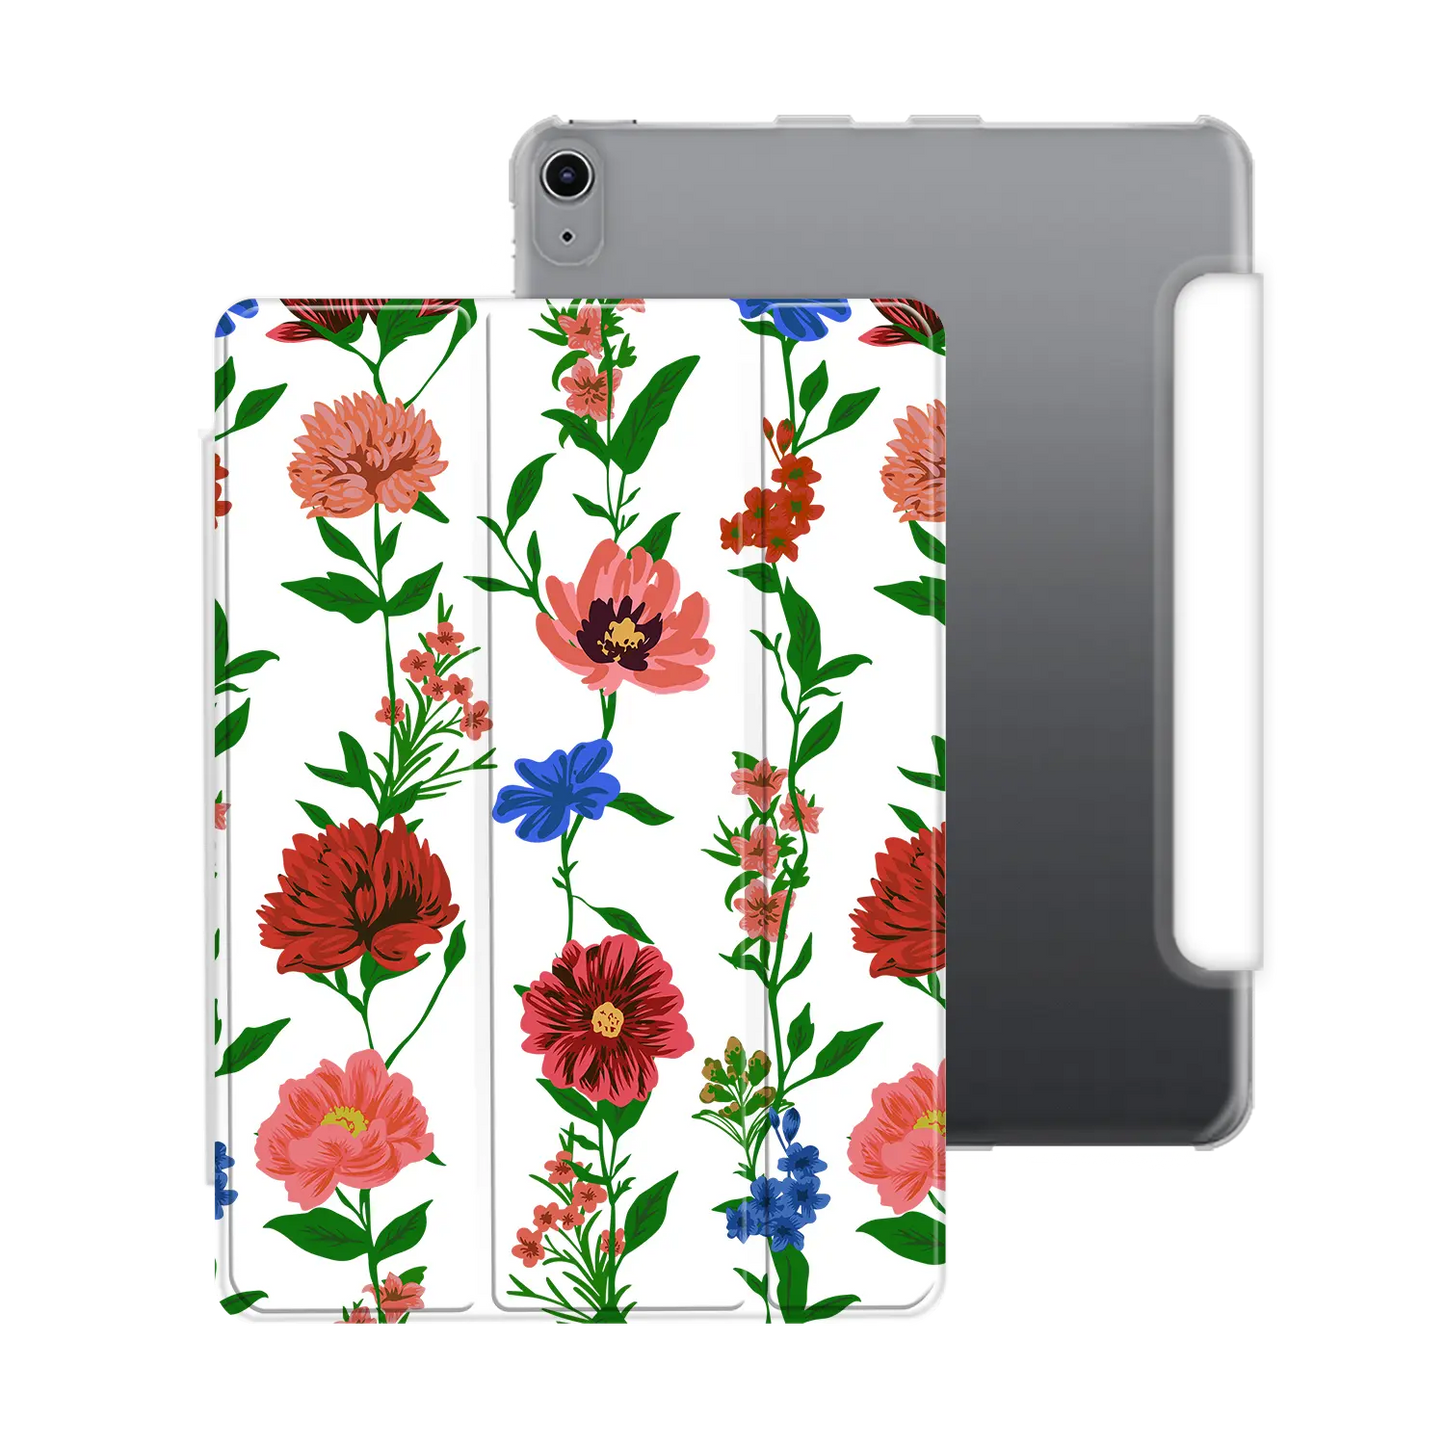 Vertical Garden - Personalised iPad Case